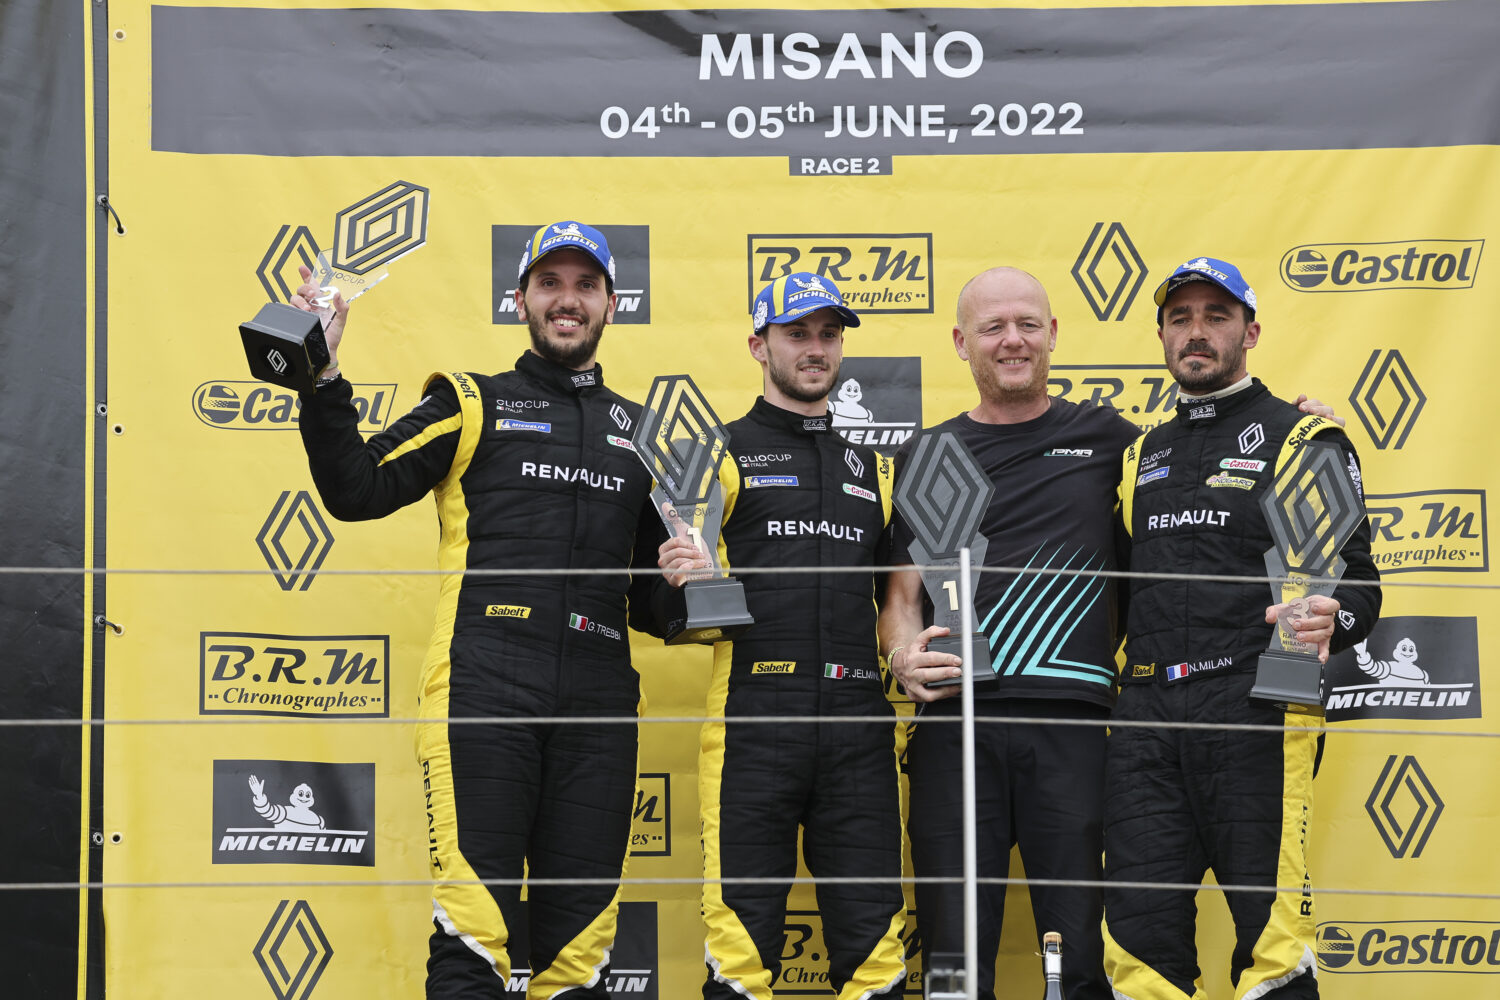 2022 - Jelmini wins on home soil at Misano